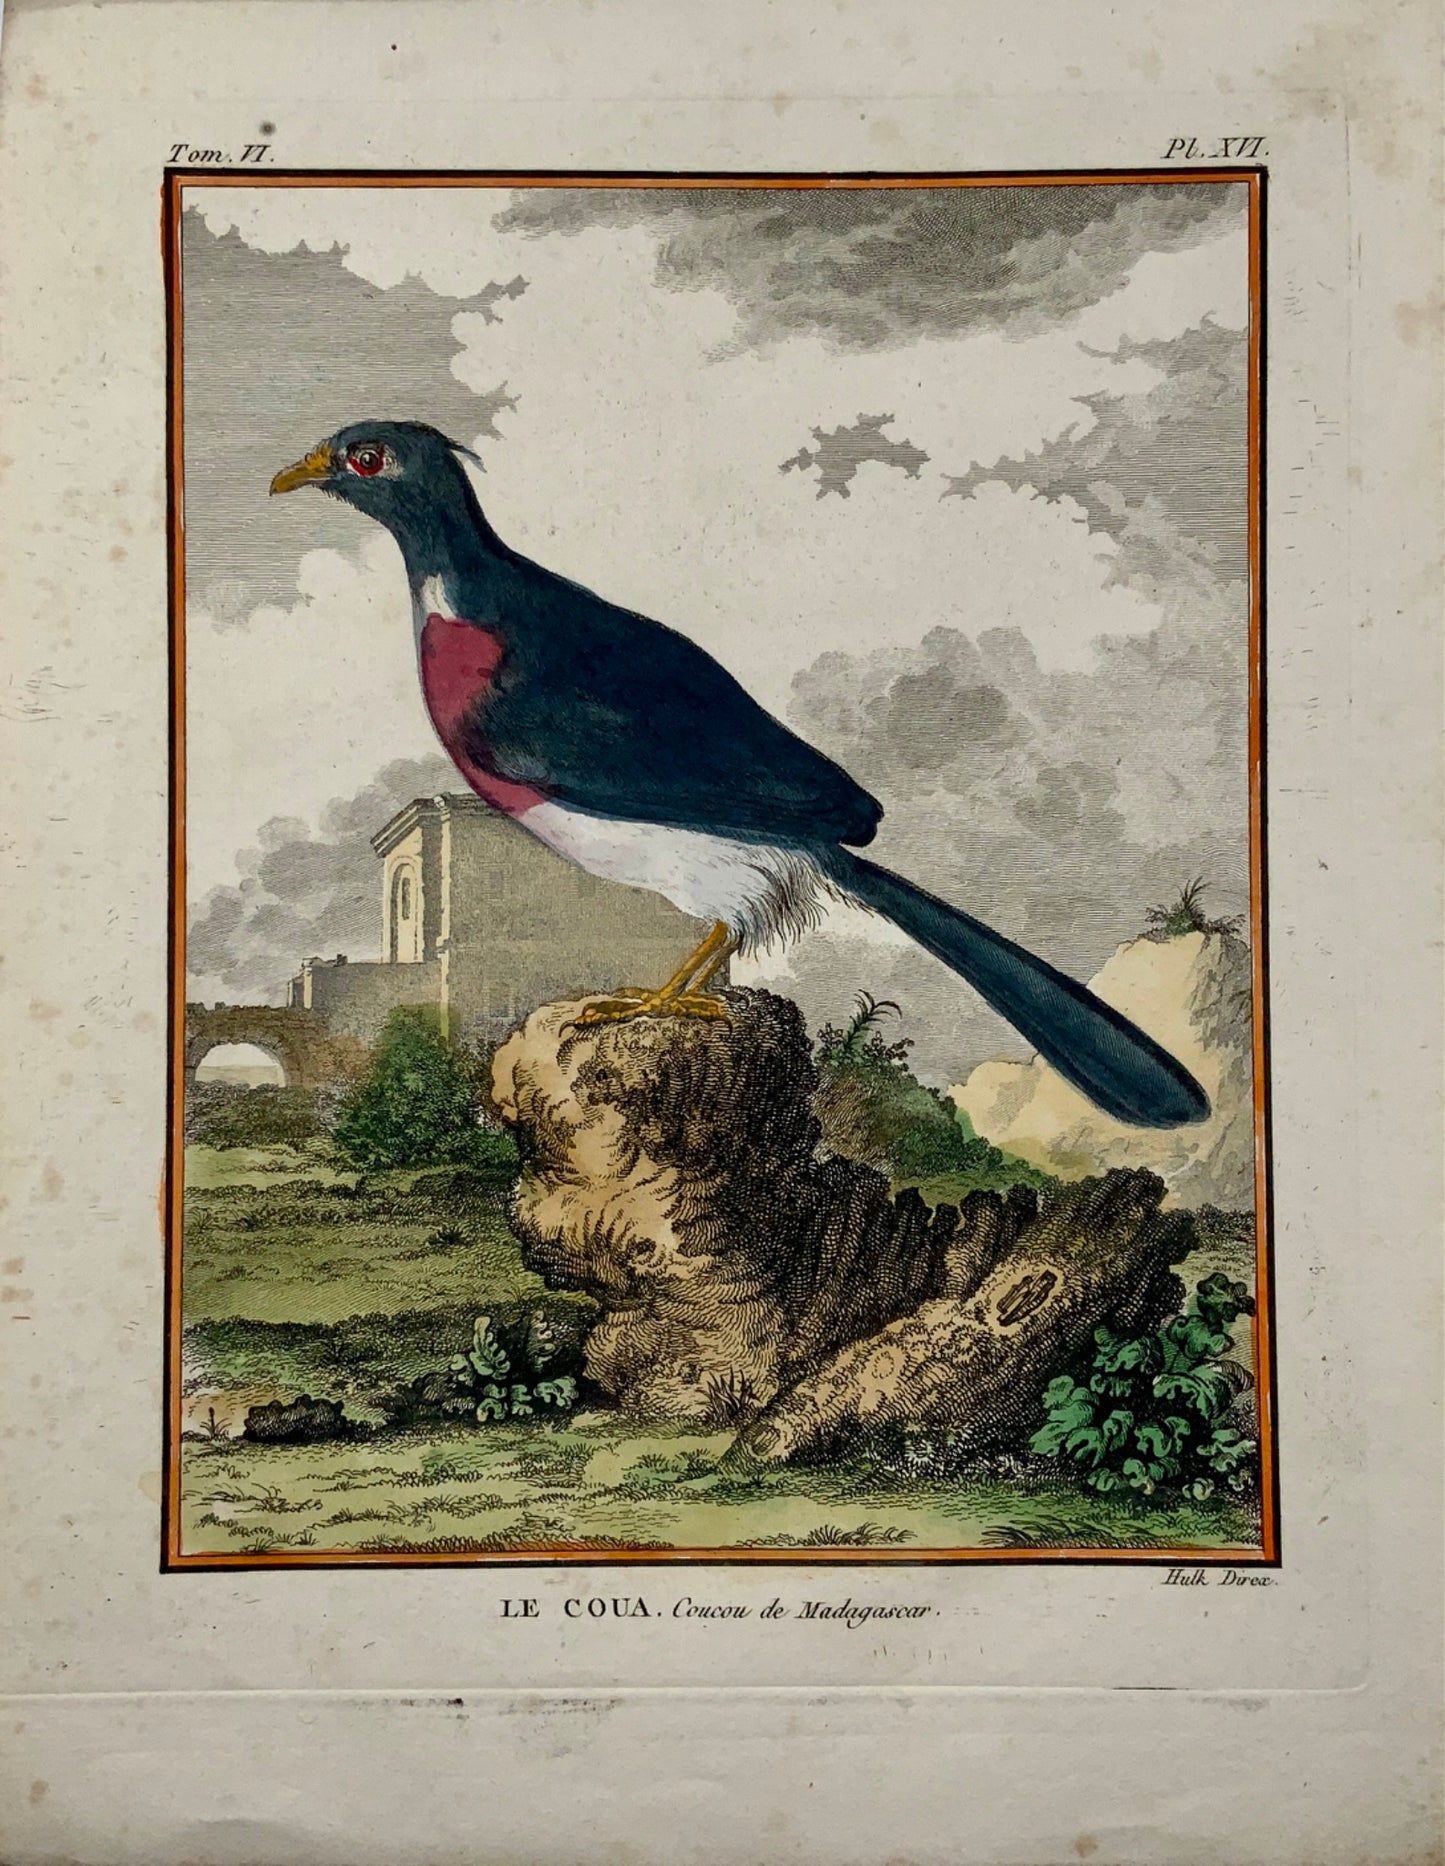 1779 de Seve; Hulk - Madagascar CUCKOO - Ornithology - 4to Large Edn engraving